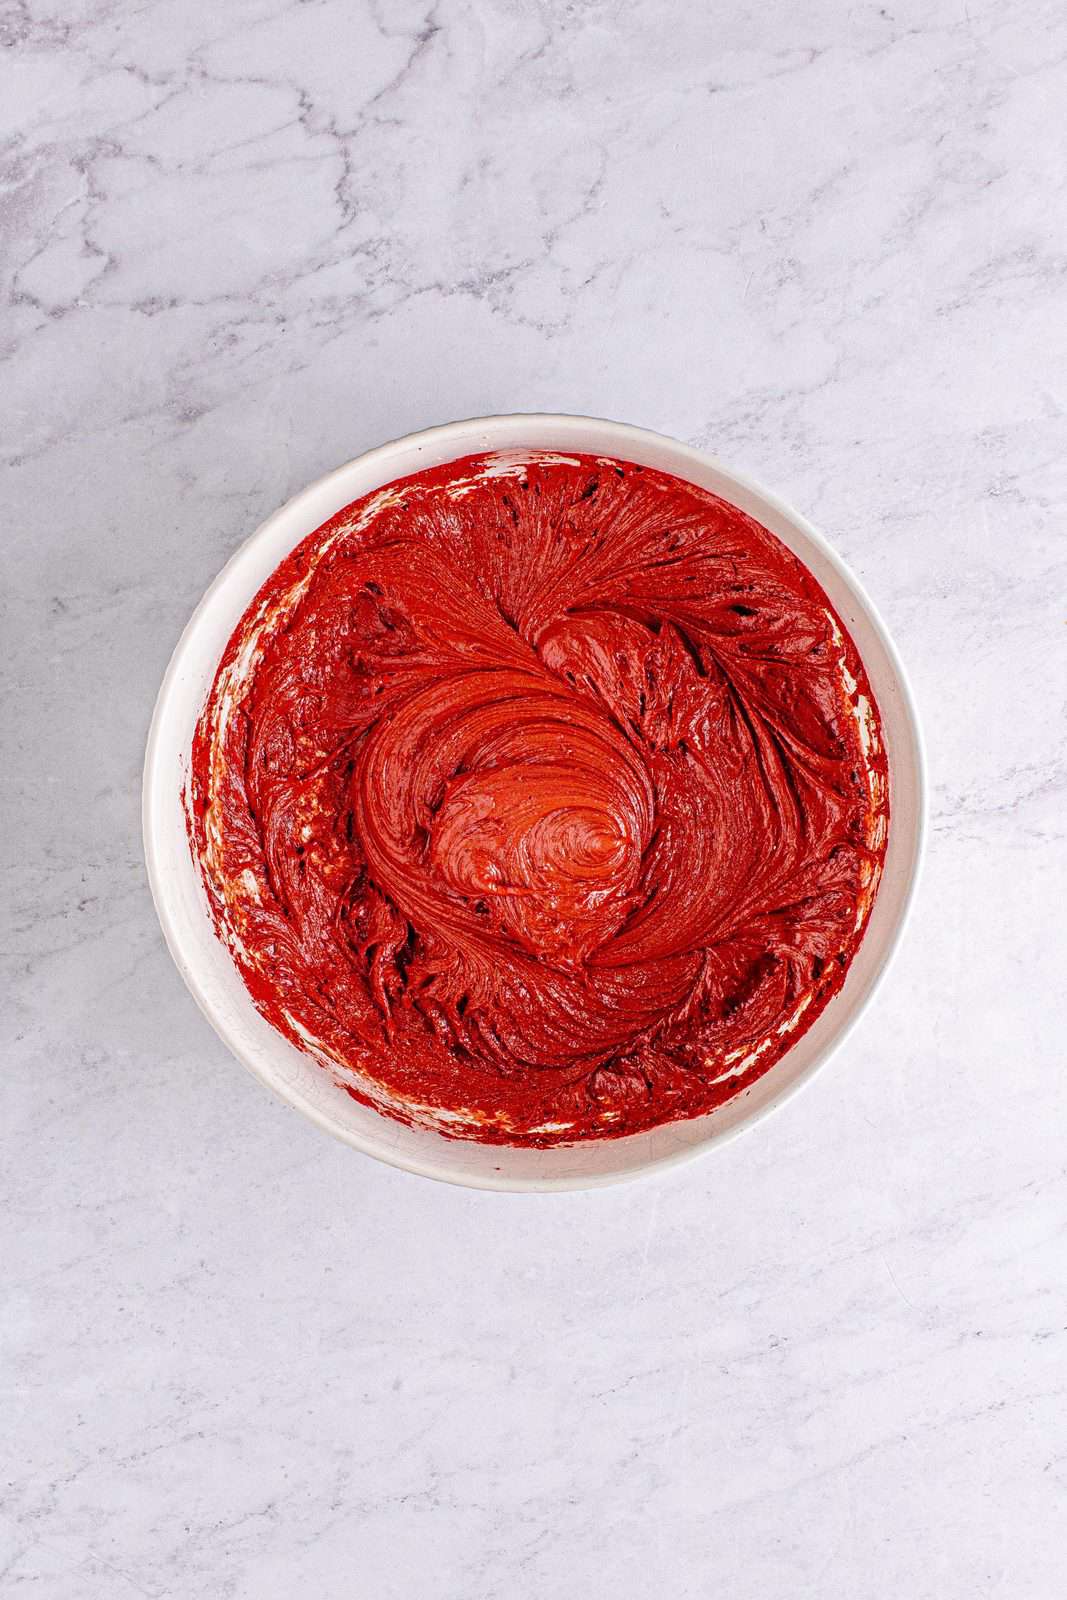 Red velvet cake mix blended together in bowl.